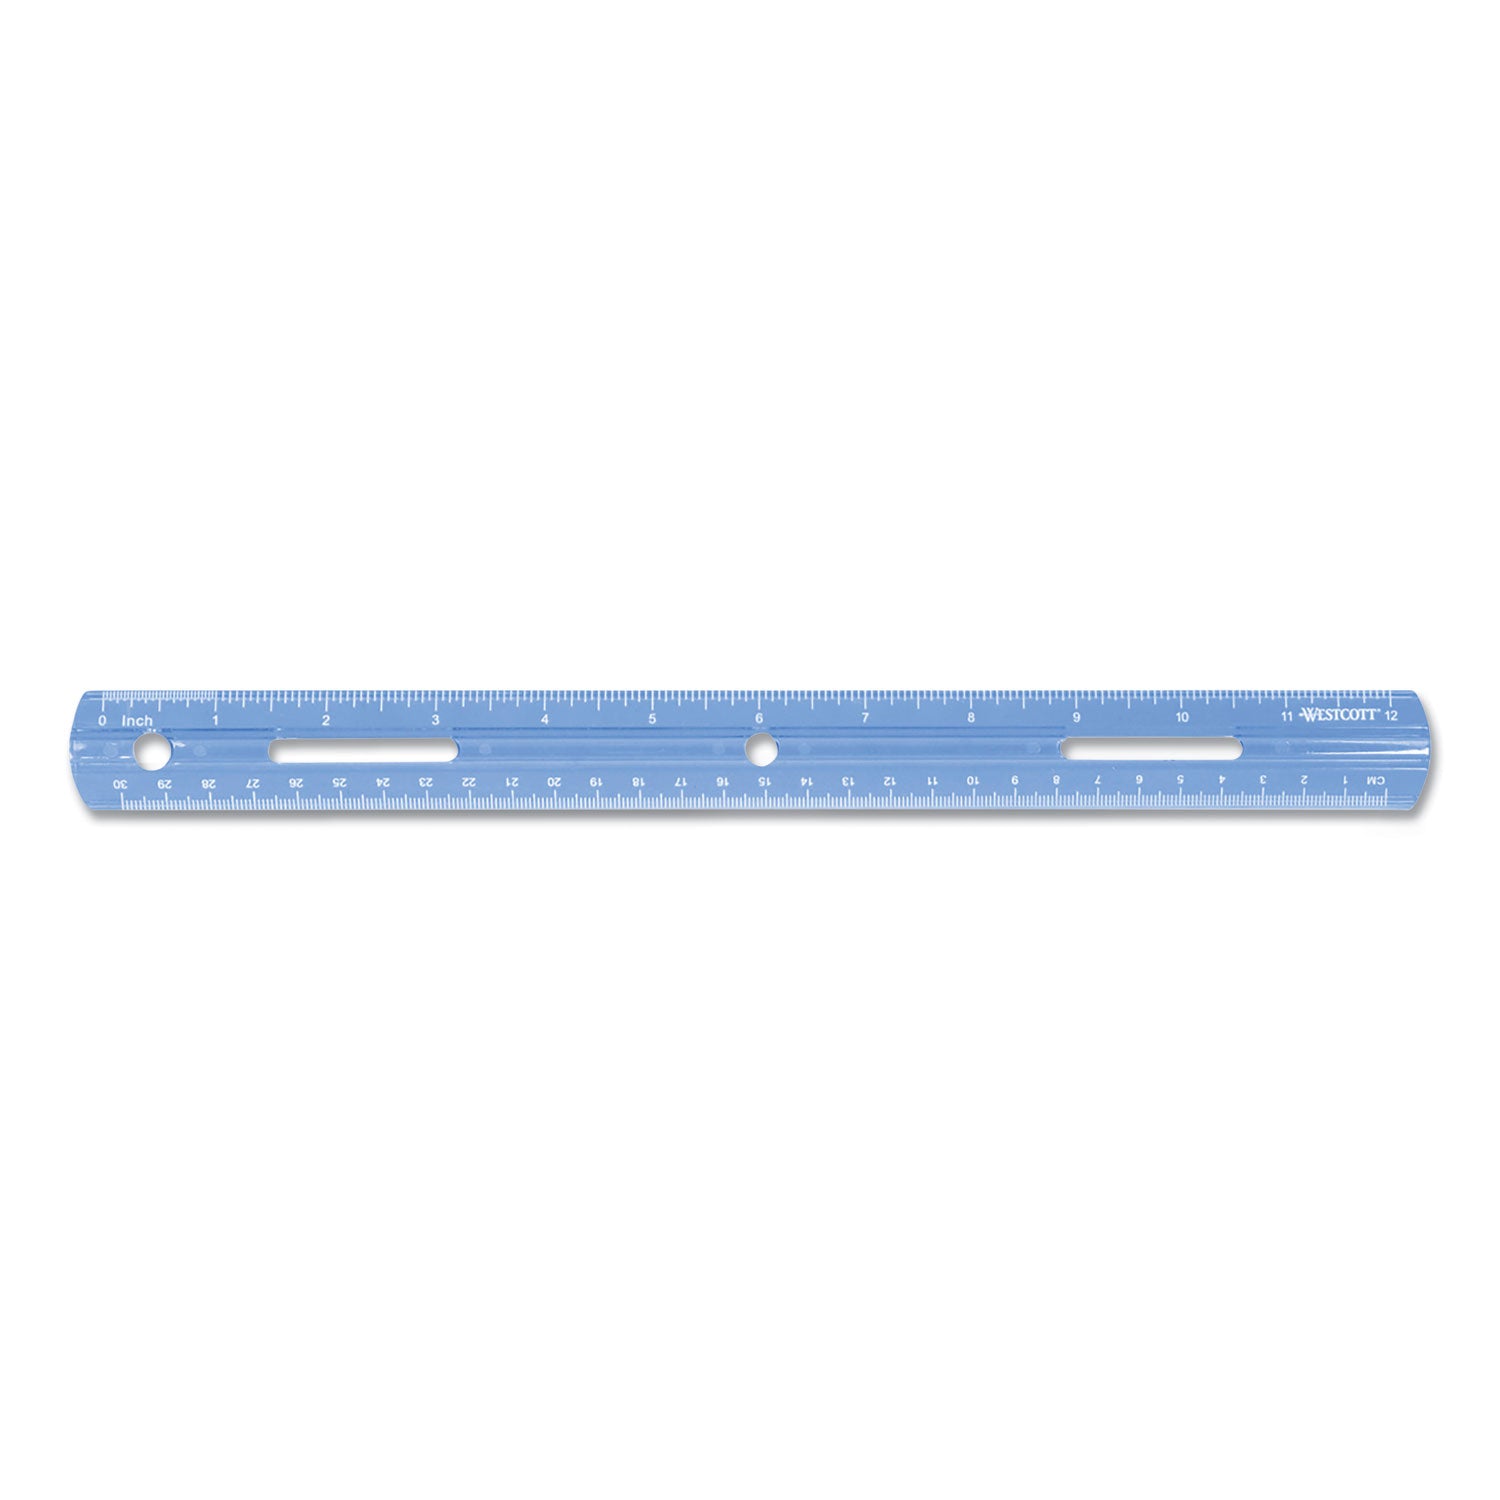 plastic-ruler-standard-metric-12-30-cm-long-assorted-translucent-colors_acm17722 - 2